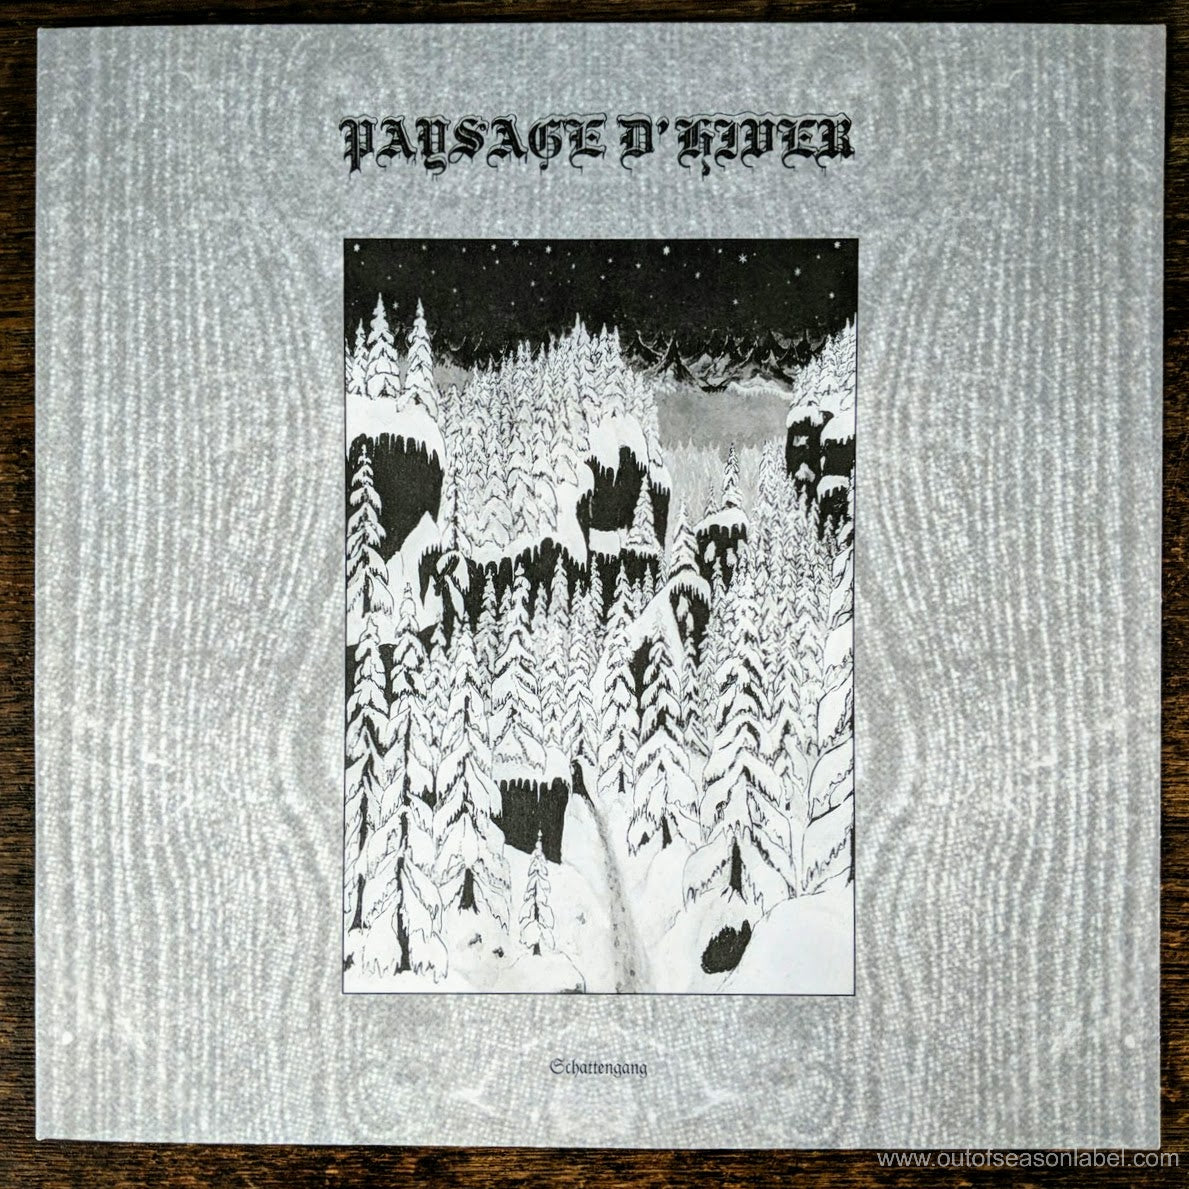 [SOLD OUT] PAYSAGE D'HIVER "Schattengang" Vinyl LP